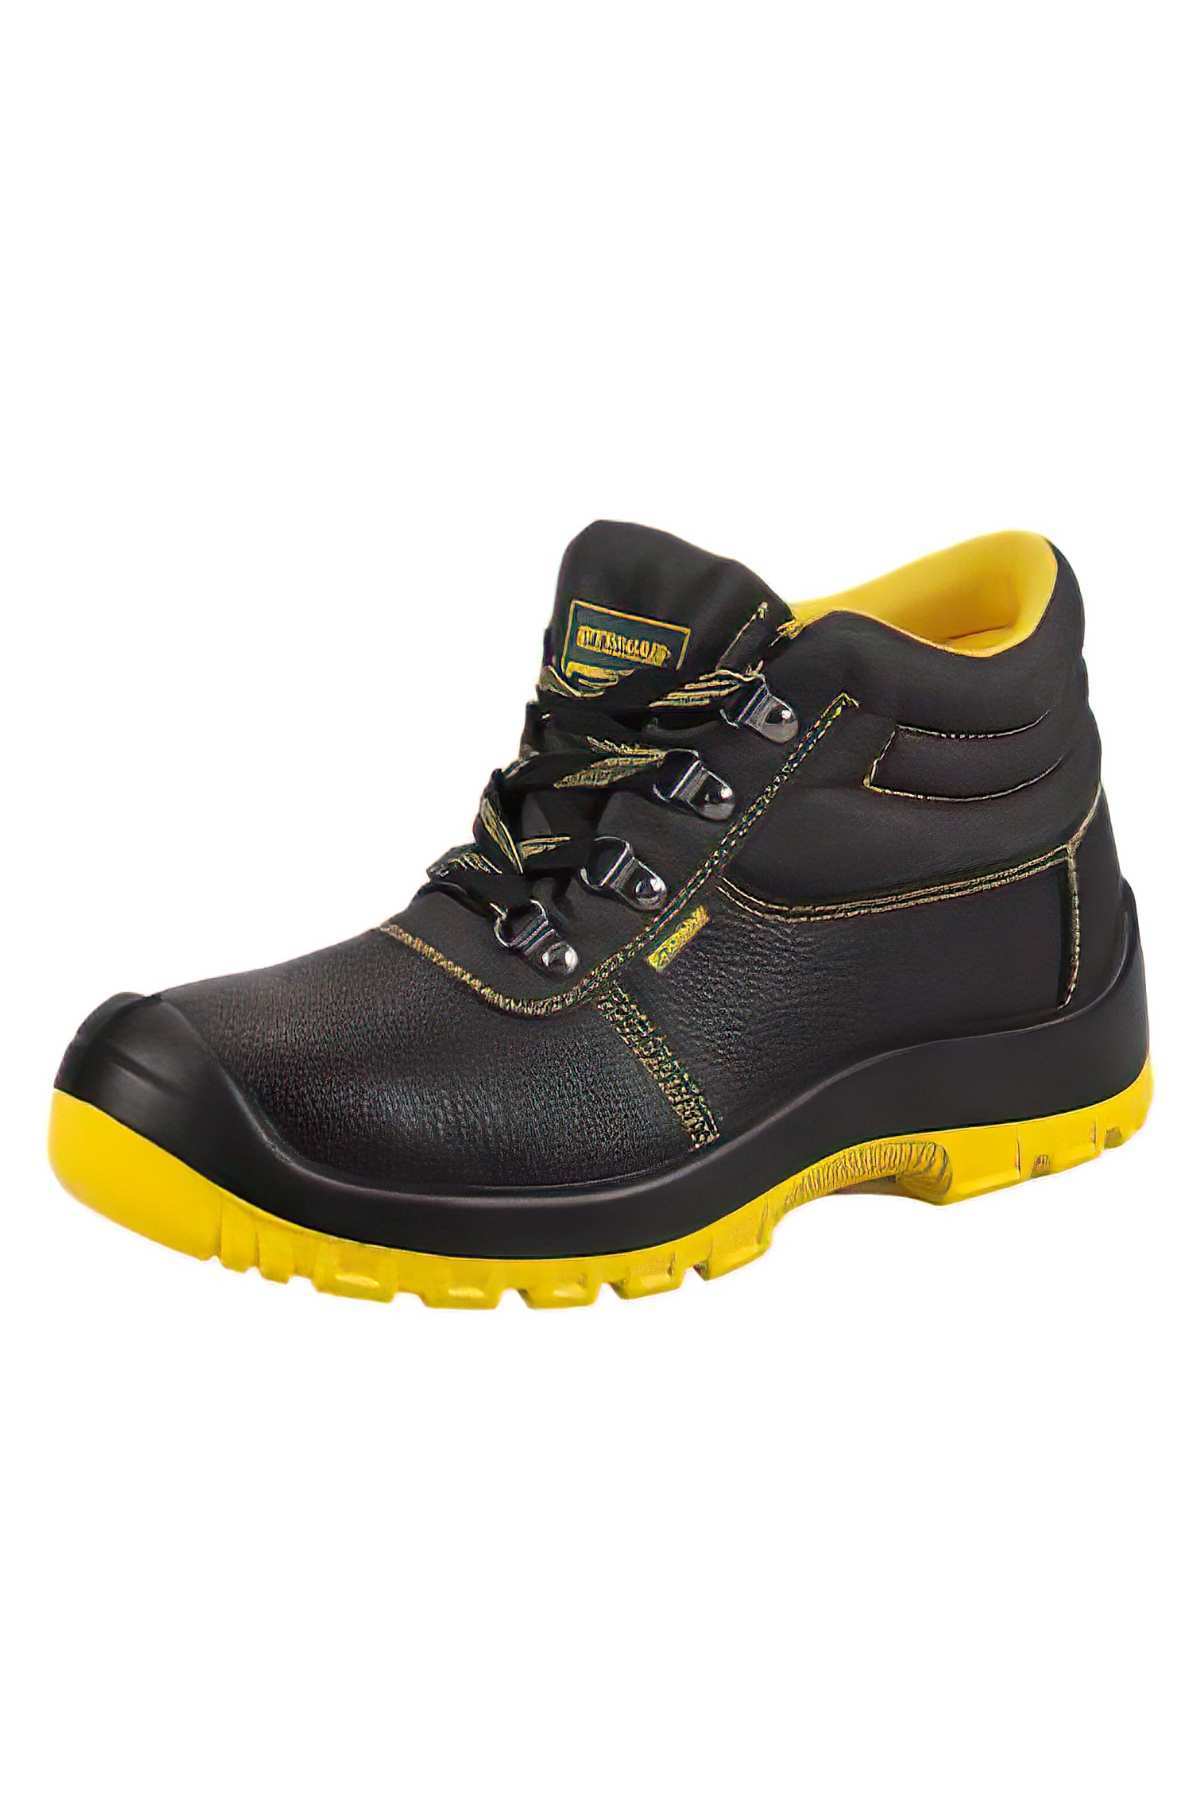 RTRMAX RHS2441 Güvenlik Ayakkabısı 